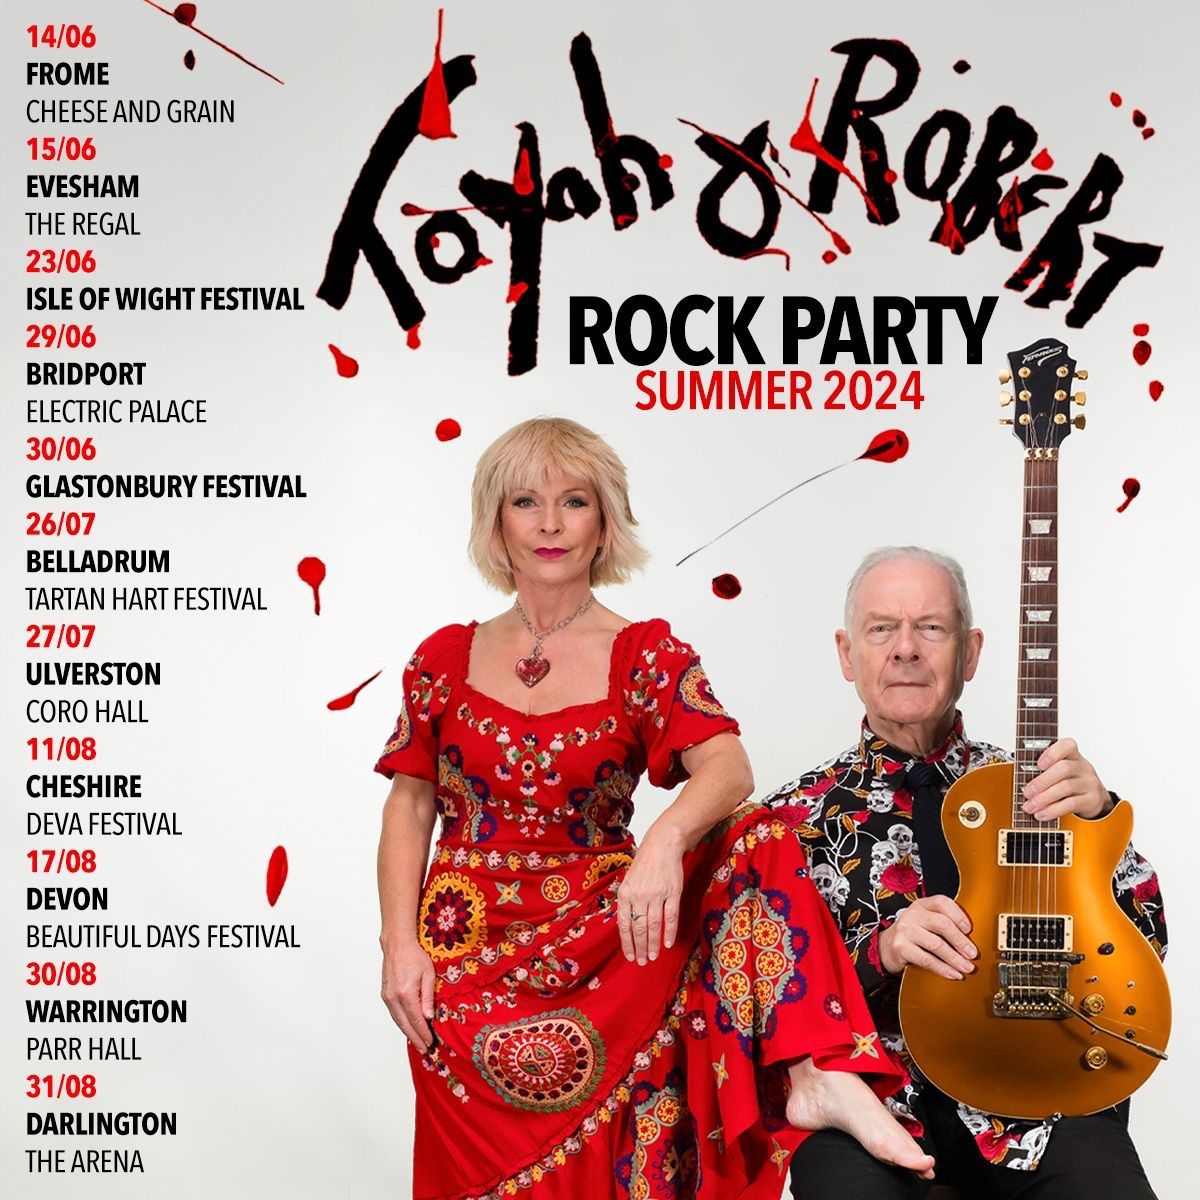 Toyah & Robert\u2019s Rock Party - Ulverston Coro Hall